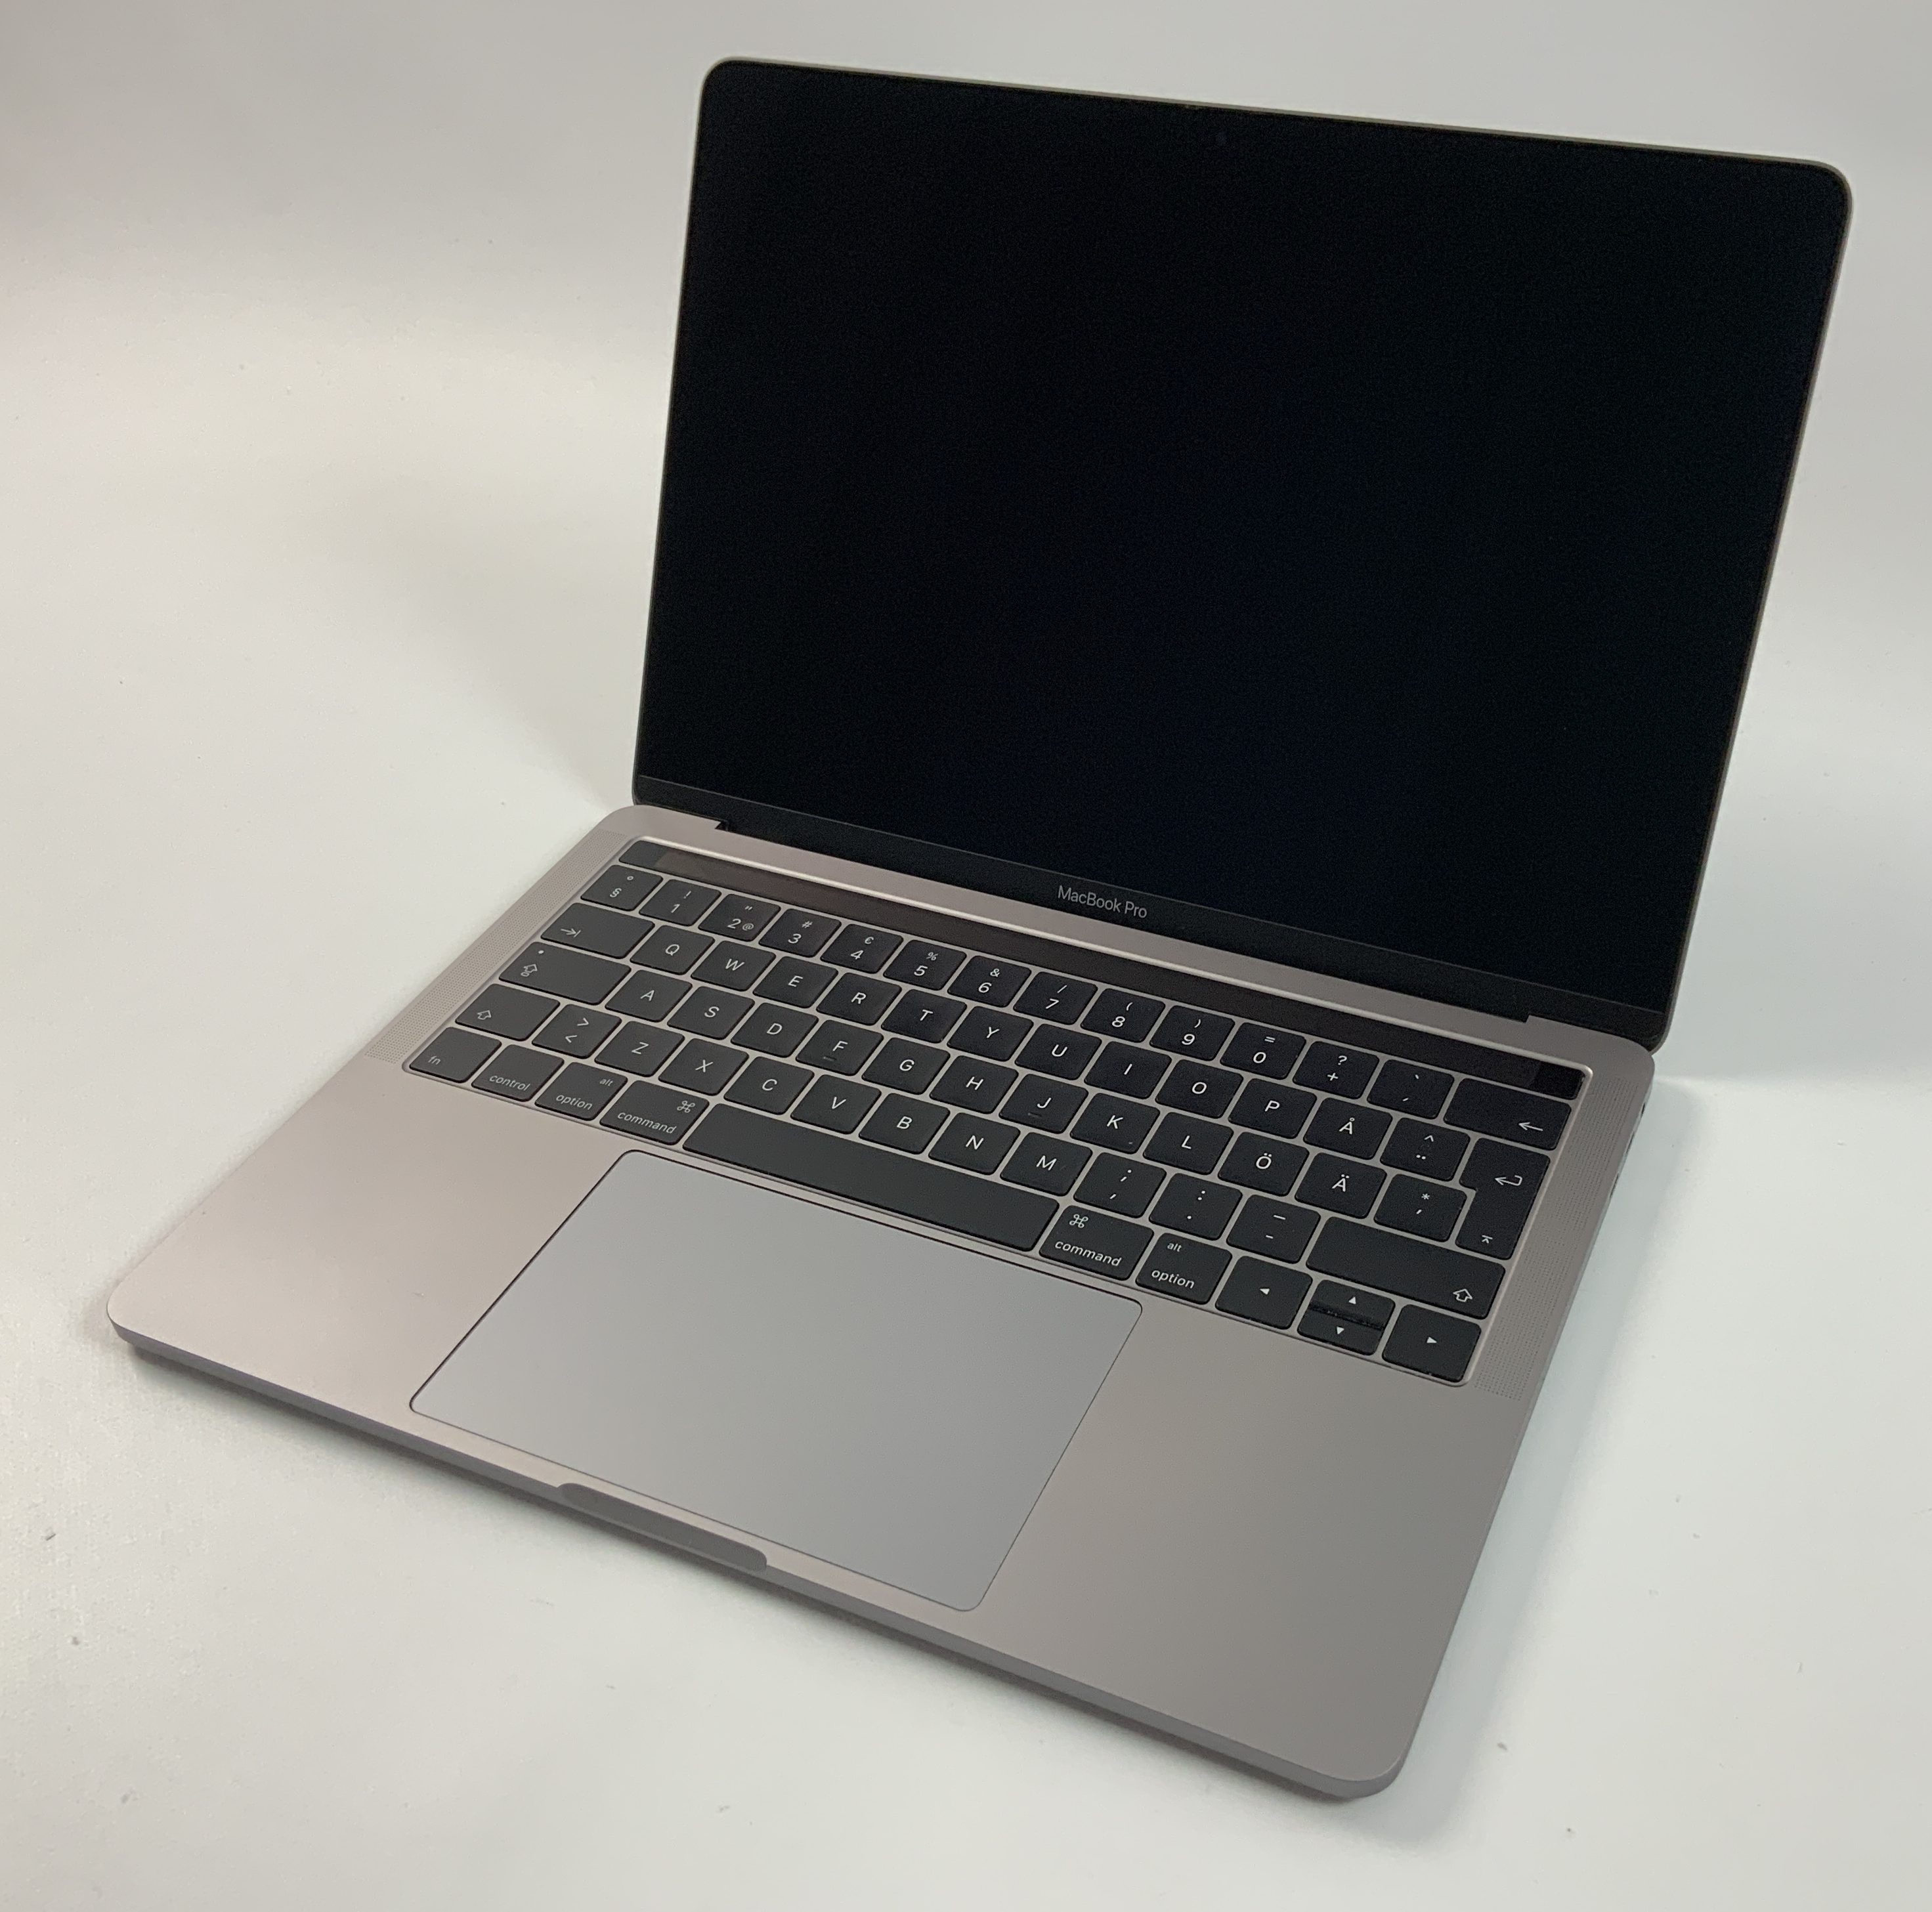 MacBook Pro 13" 4TBT Late 2016 (Intel Core i5 2.9 GHz 16 GB RAM 512 GB SSD), Space Gray, Intel Core i5 2.9 GHz, 16 GB RAM, 512 GB SSD, immagine 1